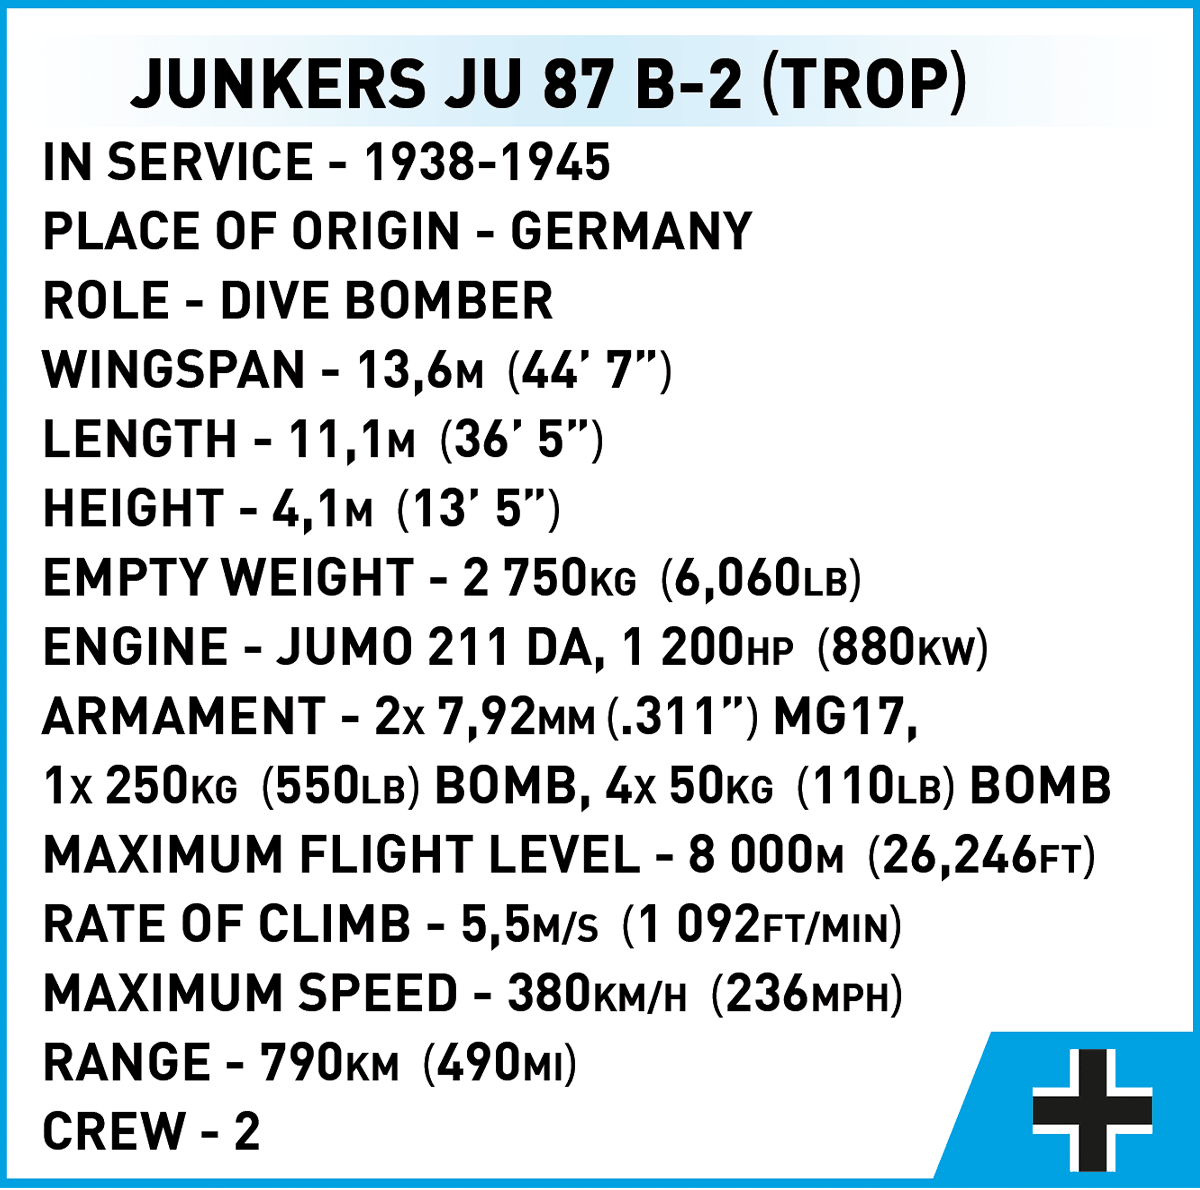 German dive bomber Junkers JU-87B Stuka COBI 5730 - World War II - kopie